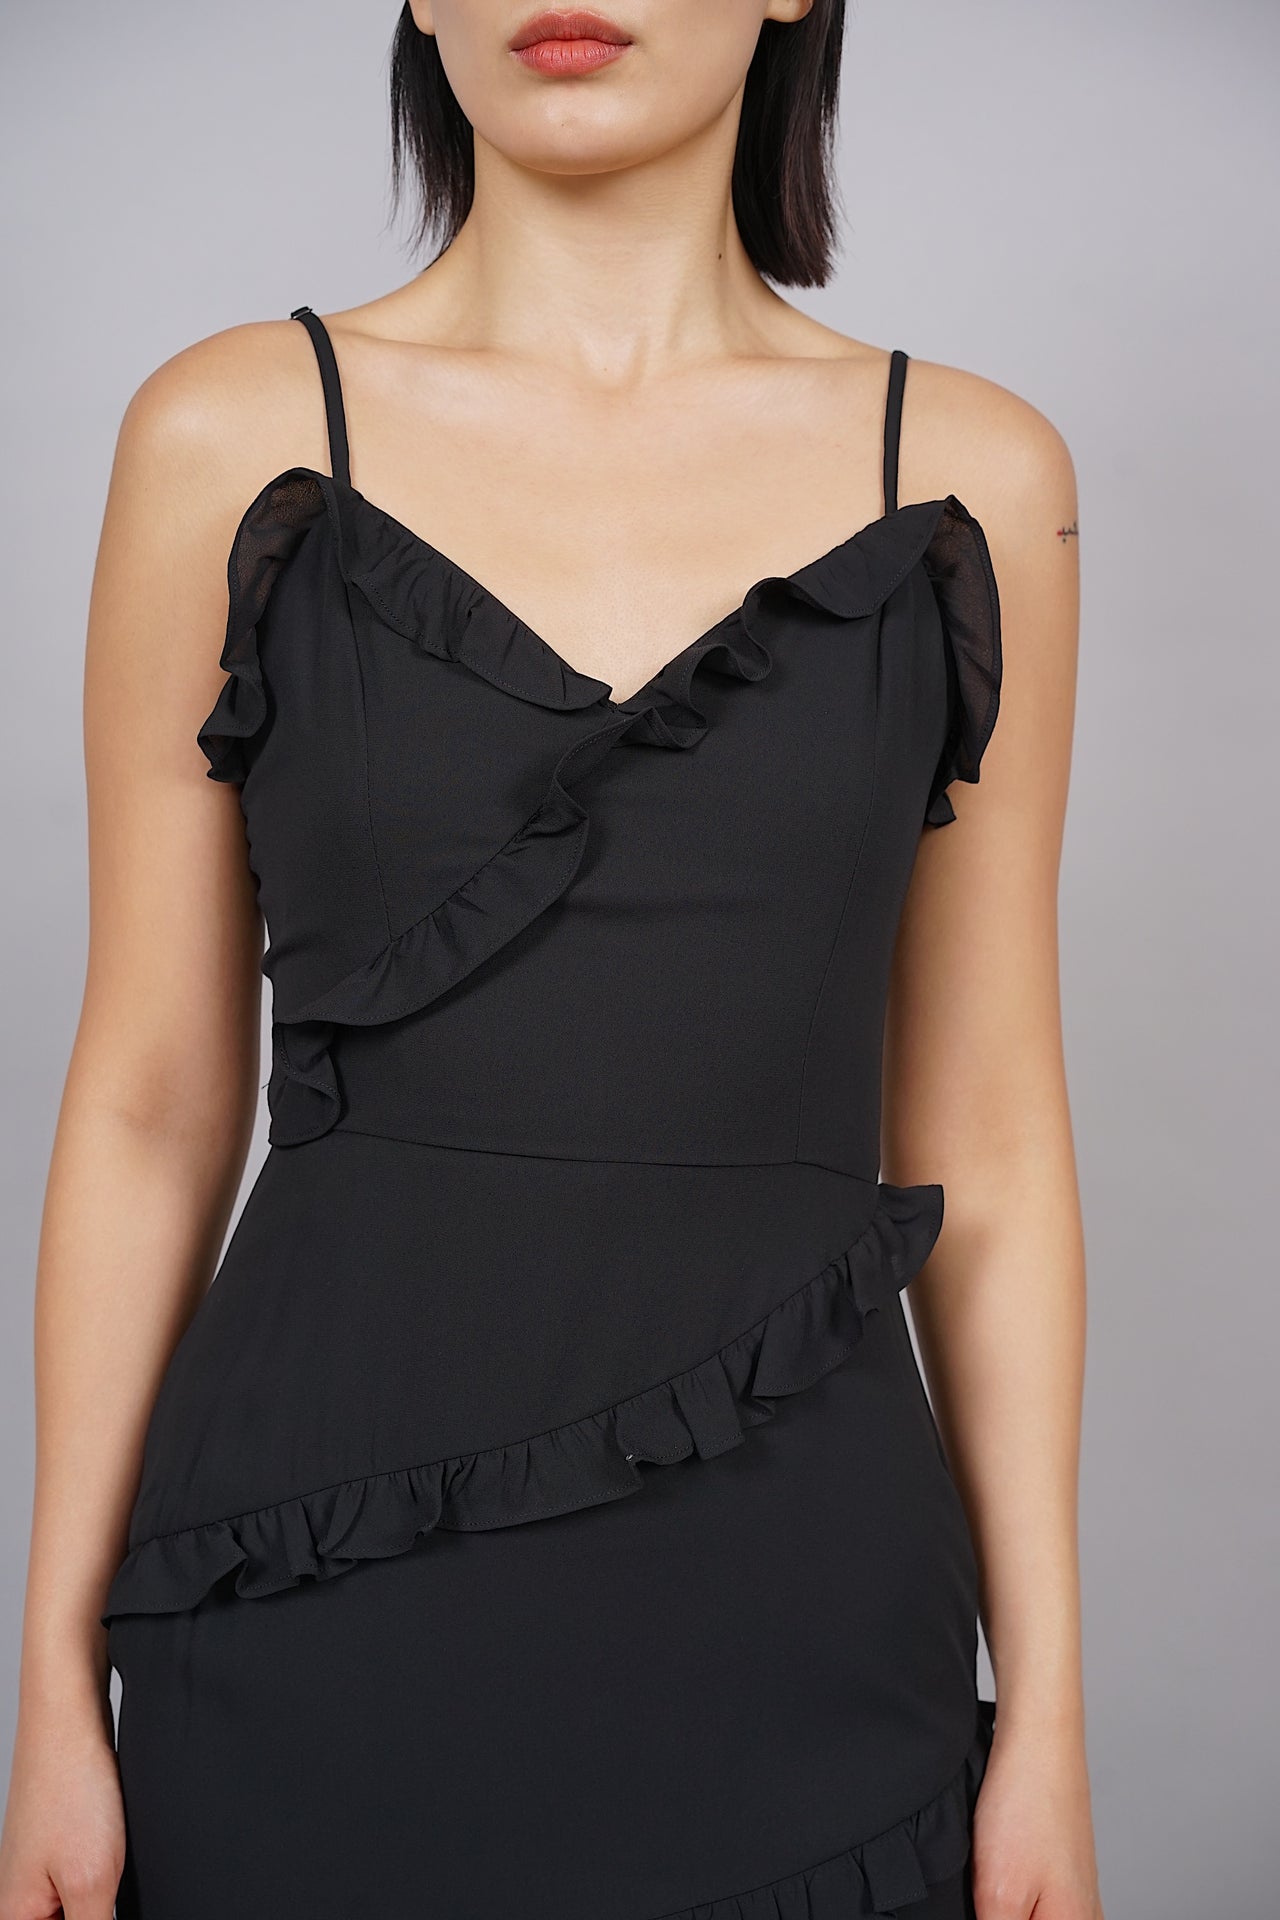 Eleda Ruffled Maxi Dress in Black